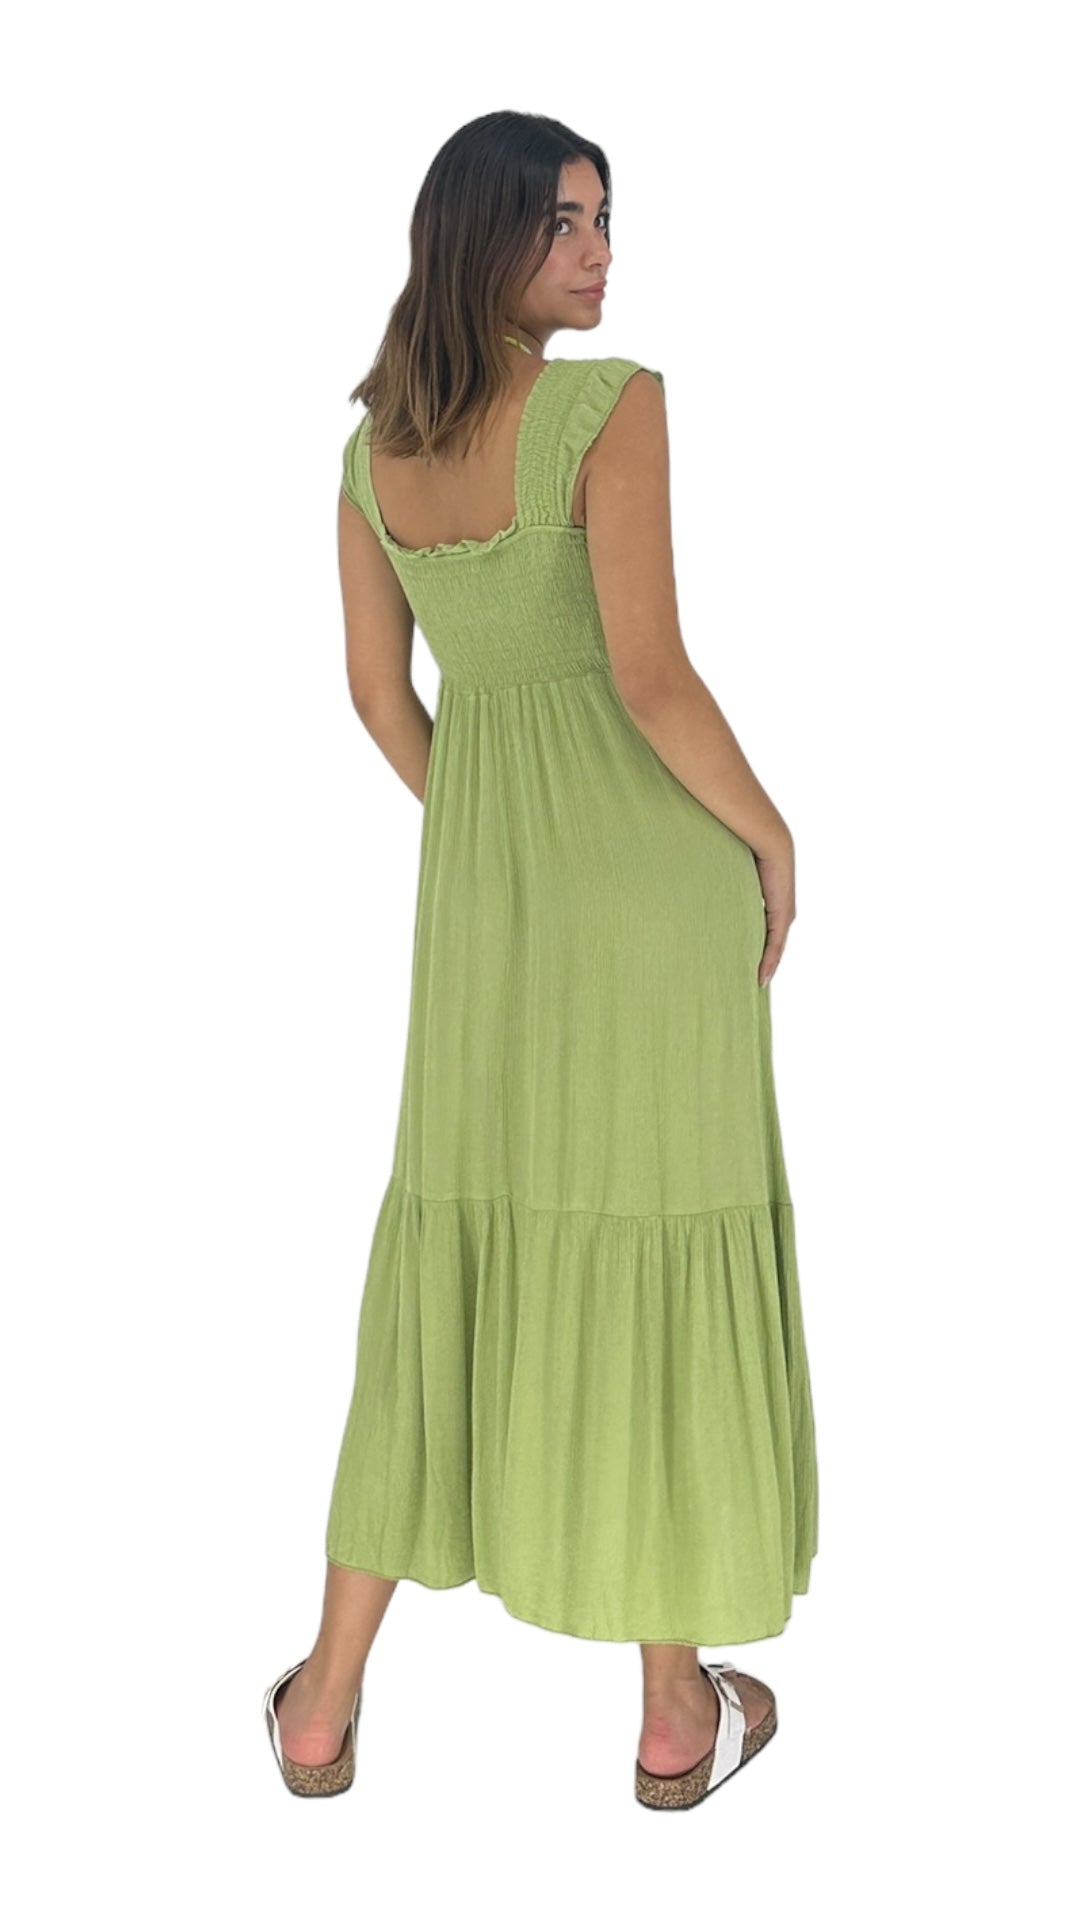 Anine dress in green